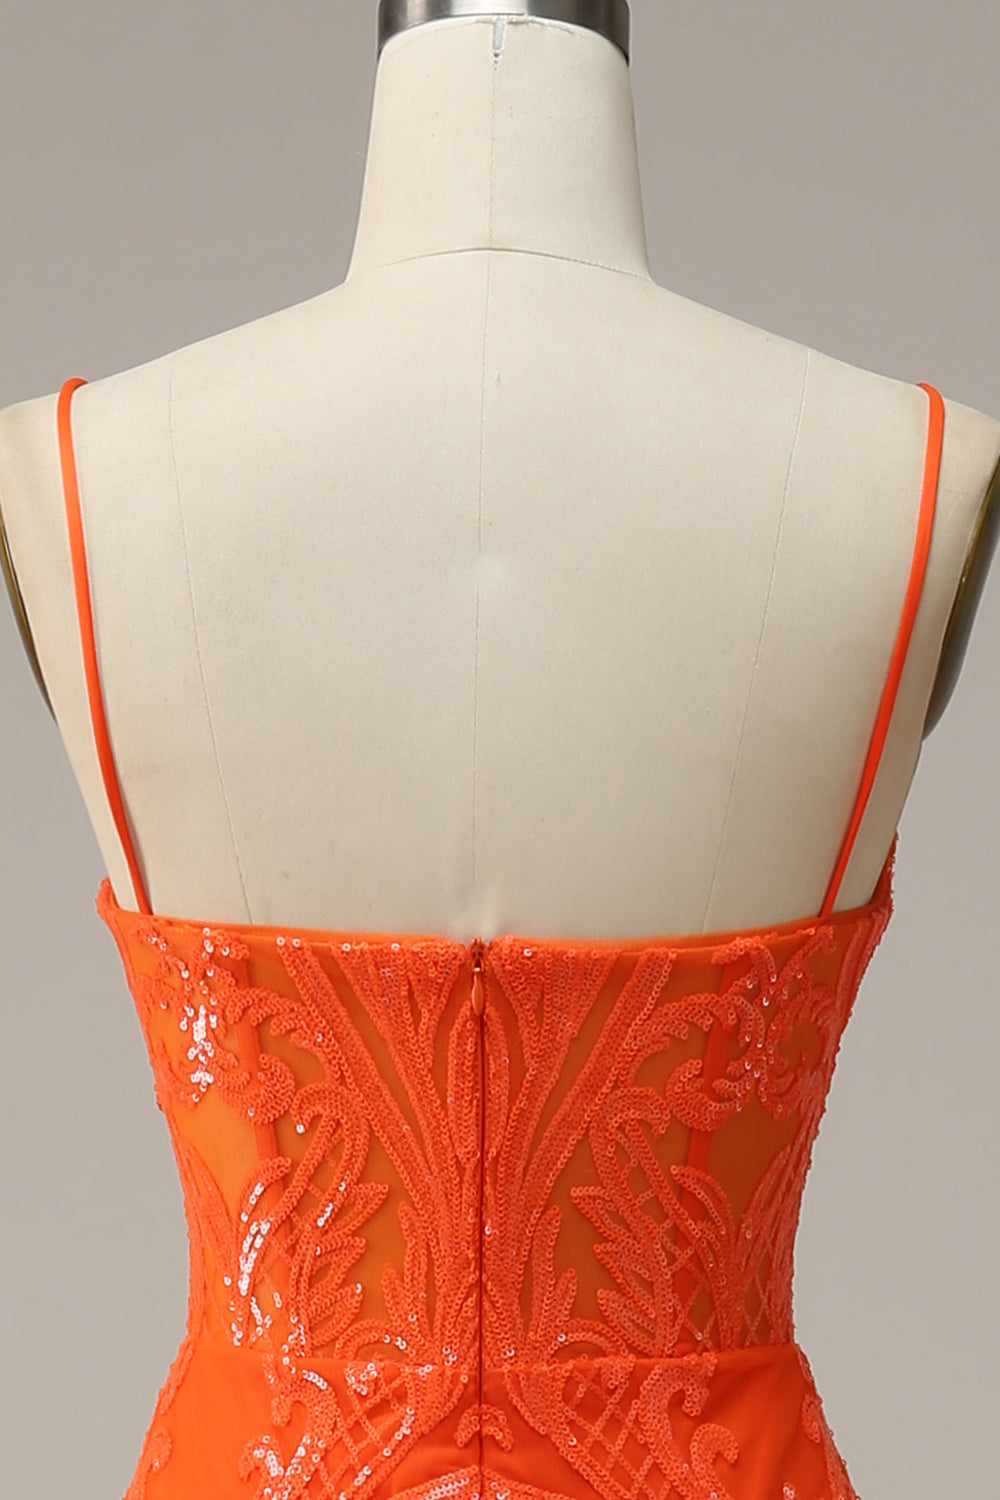 Mermaid Spaghetti Straps Orange Long Prom Dress with Slit Front